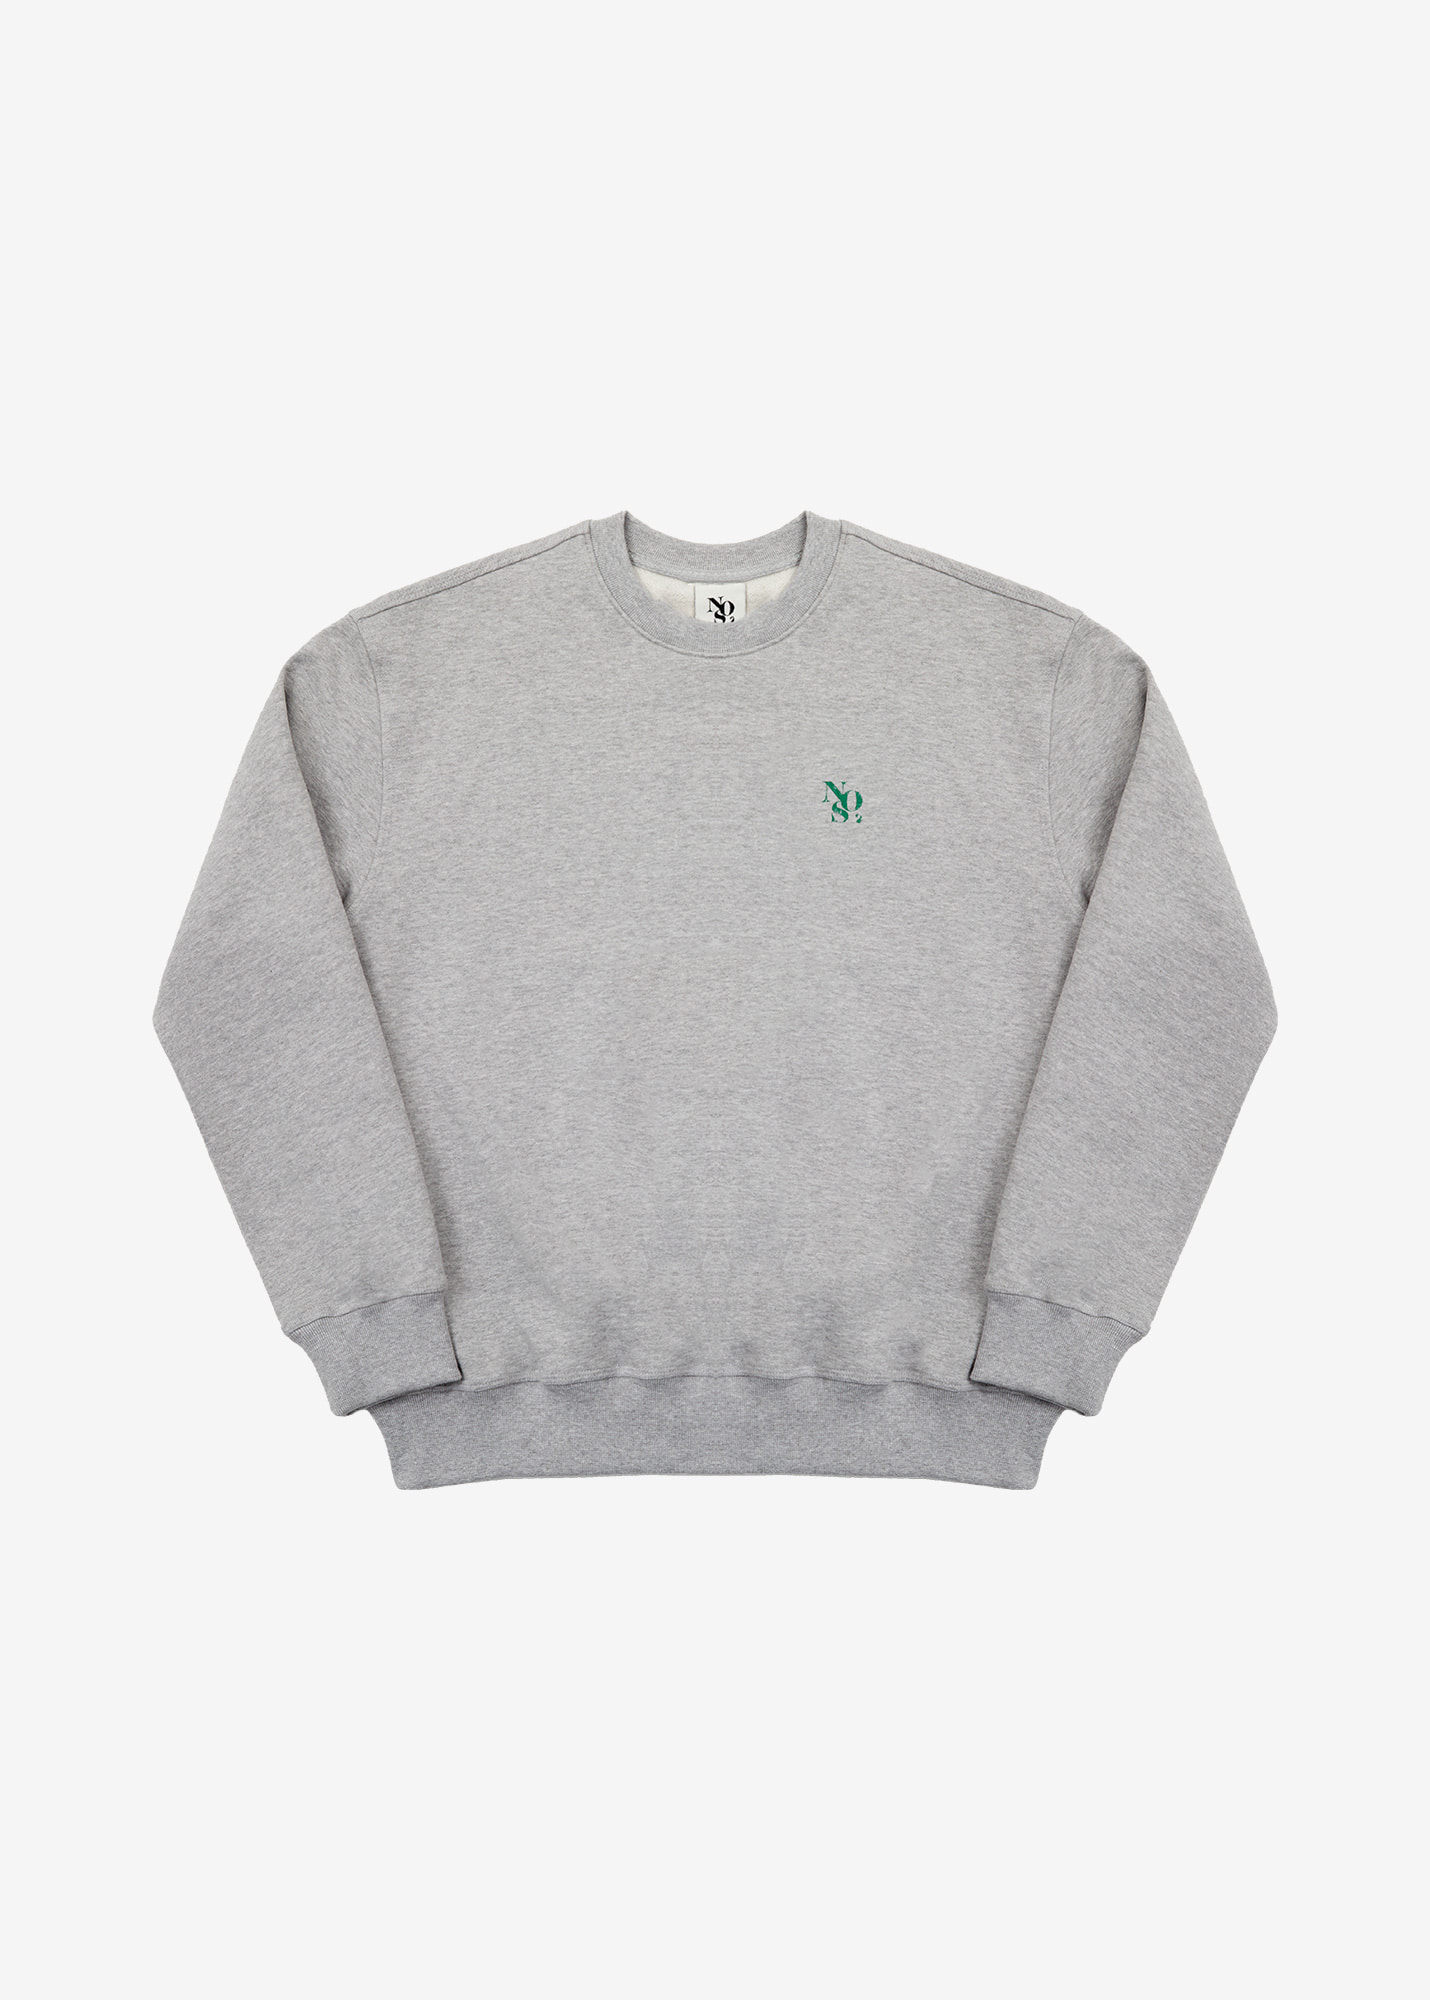 NOS7 Scretch Logo Fleece Sweatshirt - Gray